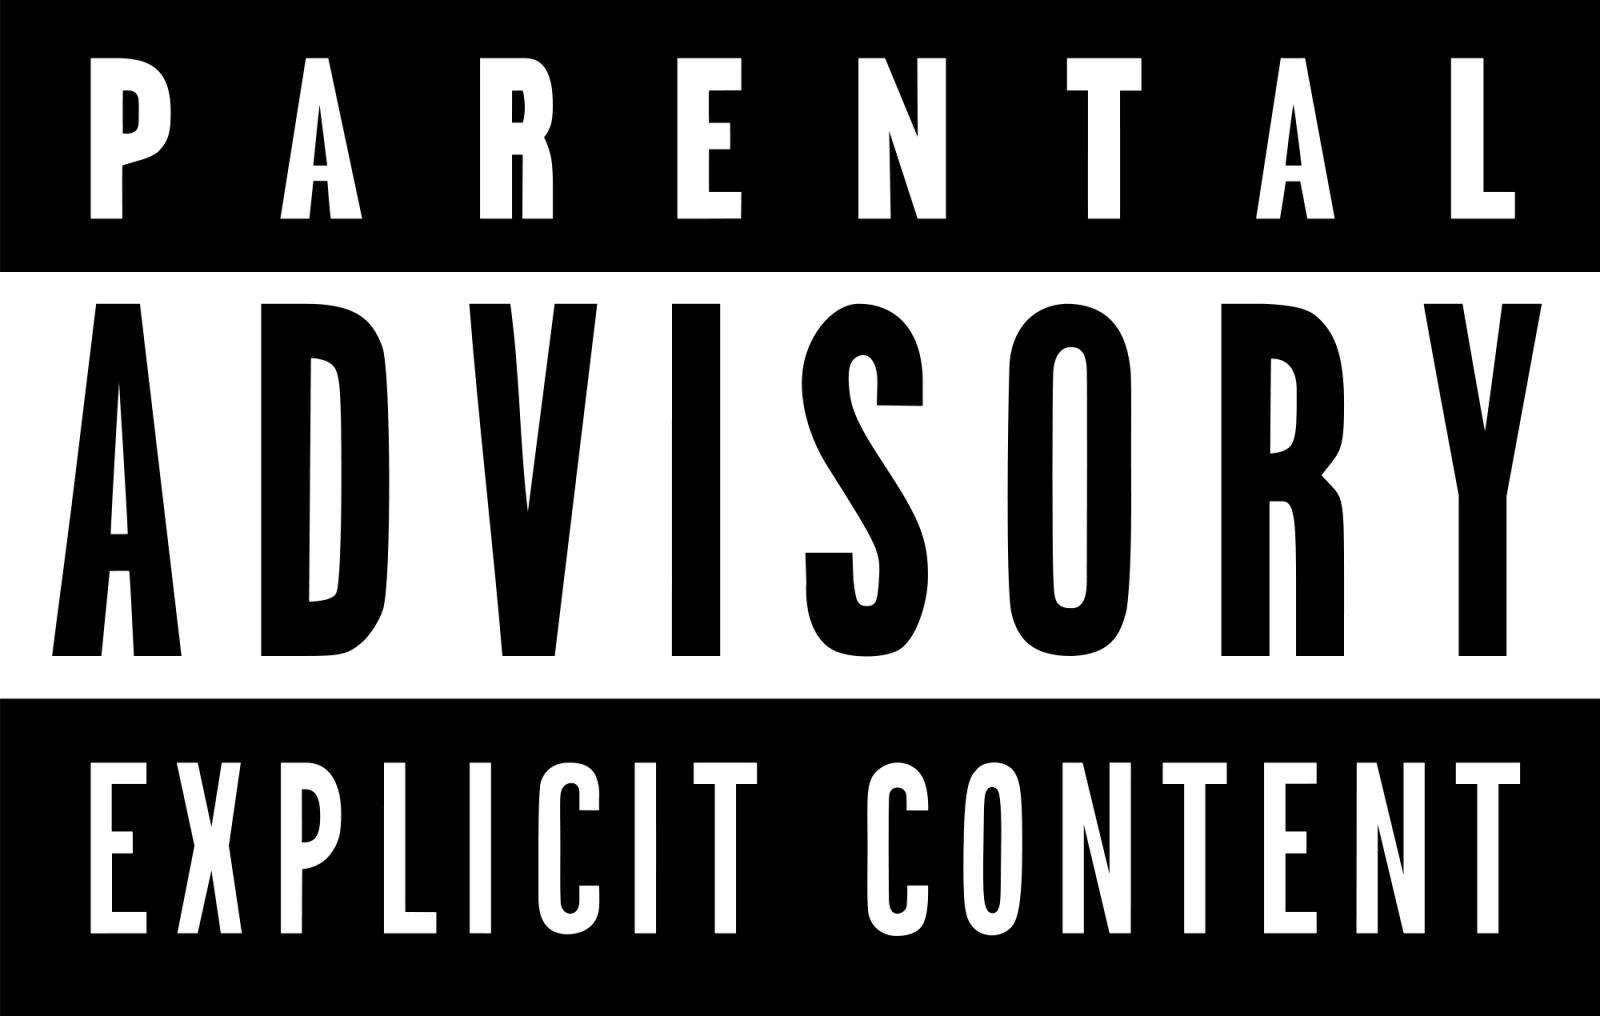 Explicit Adult Content 15